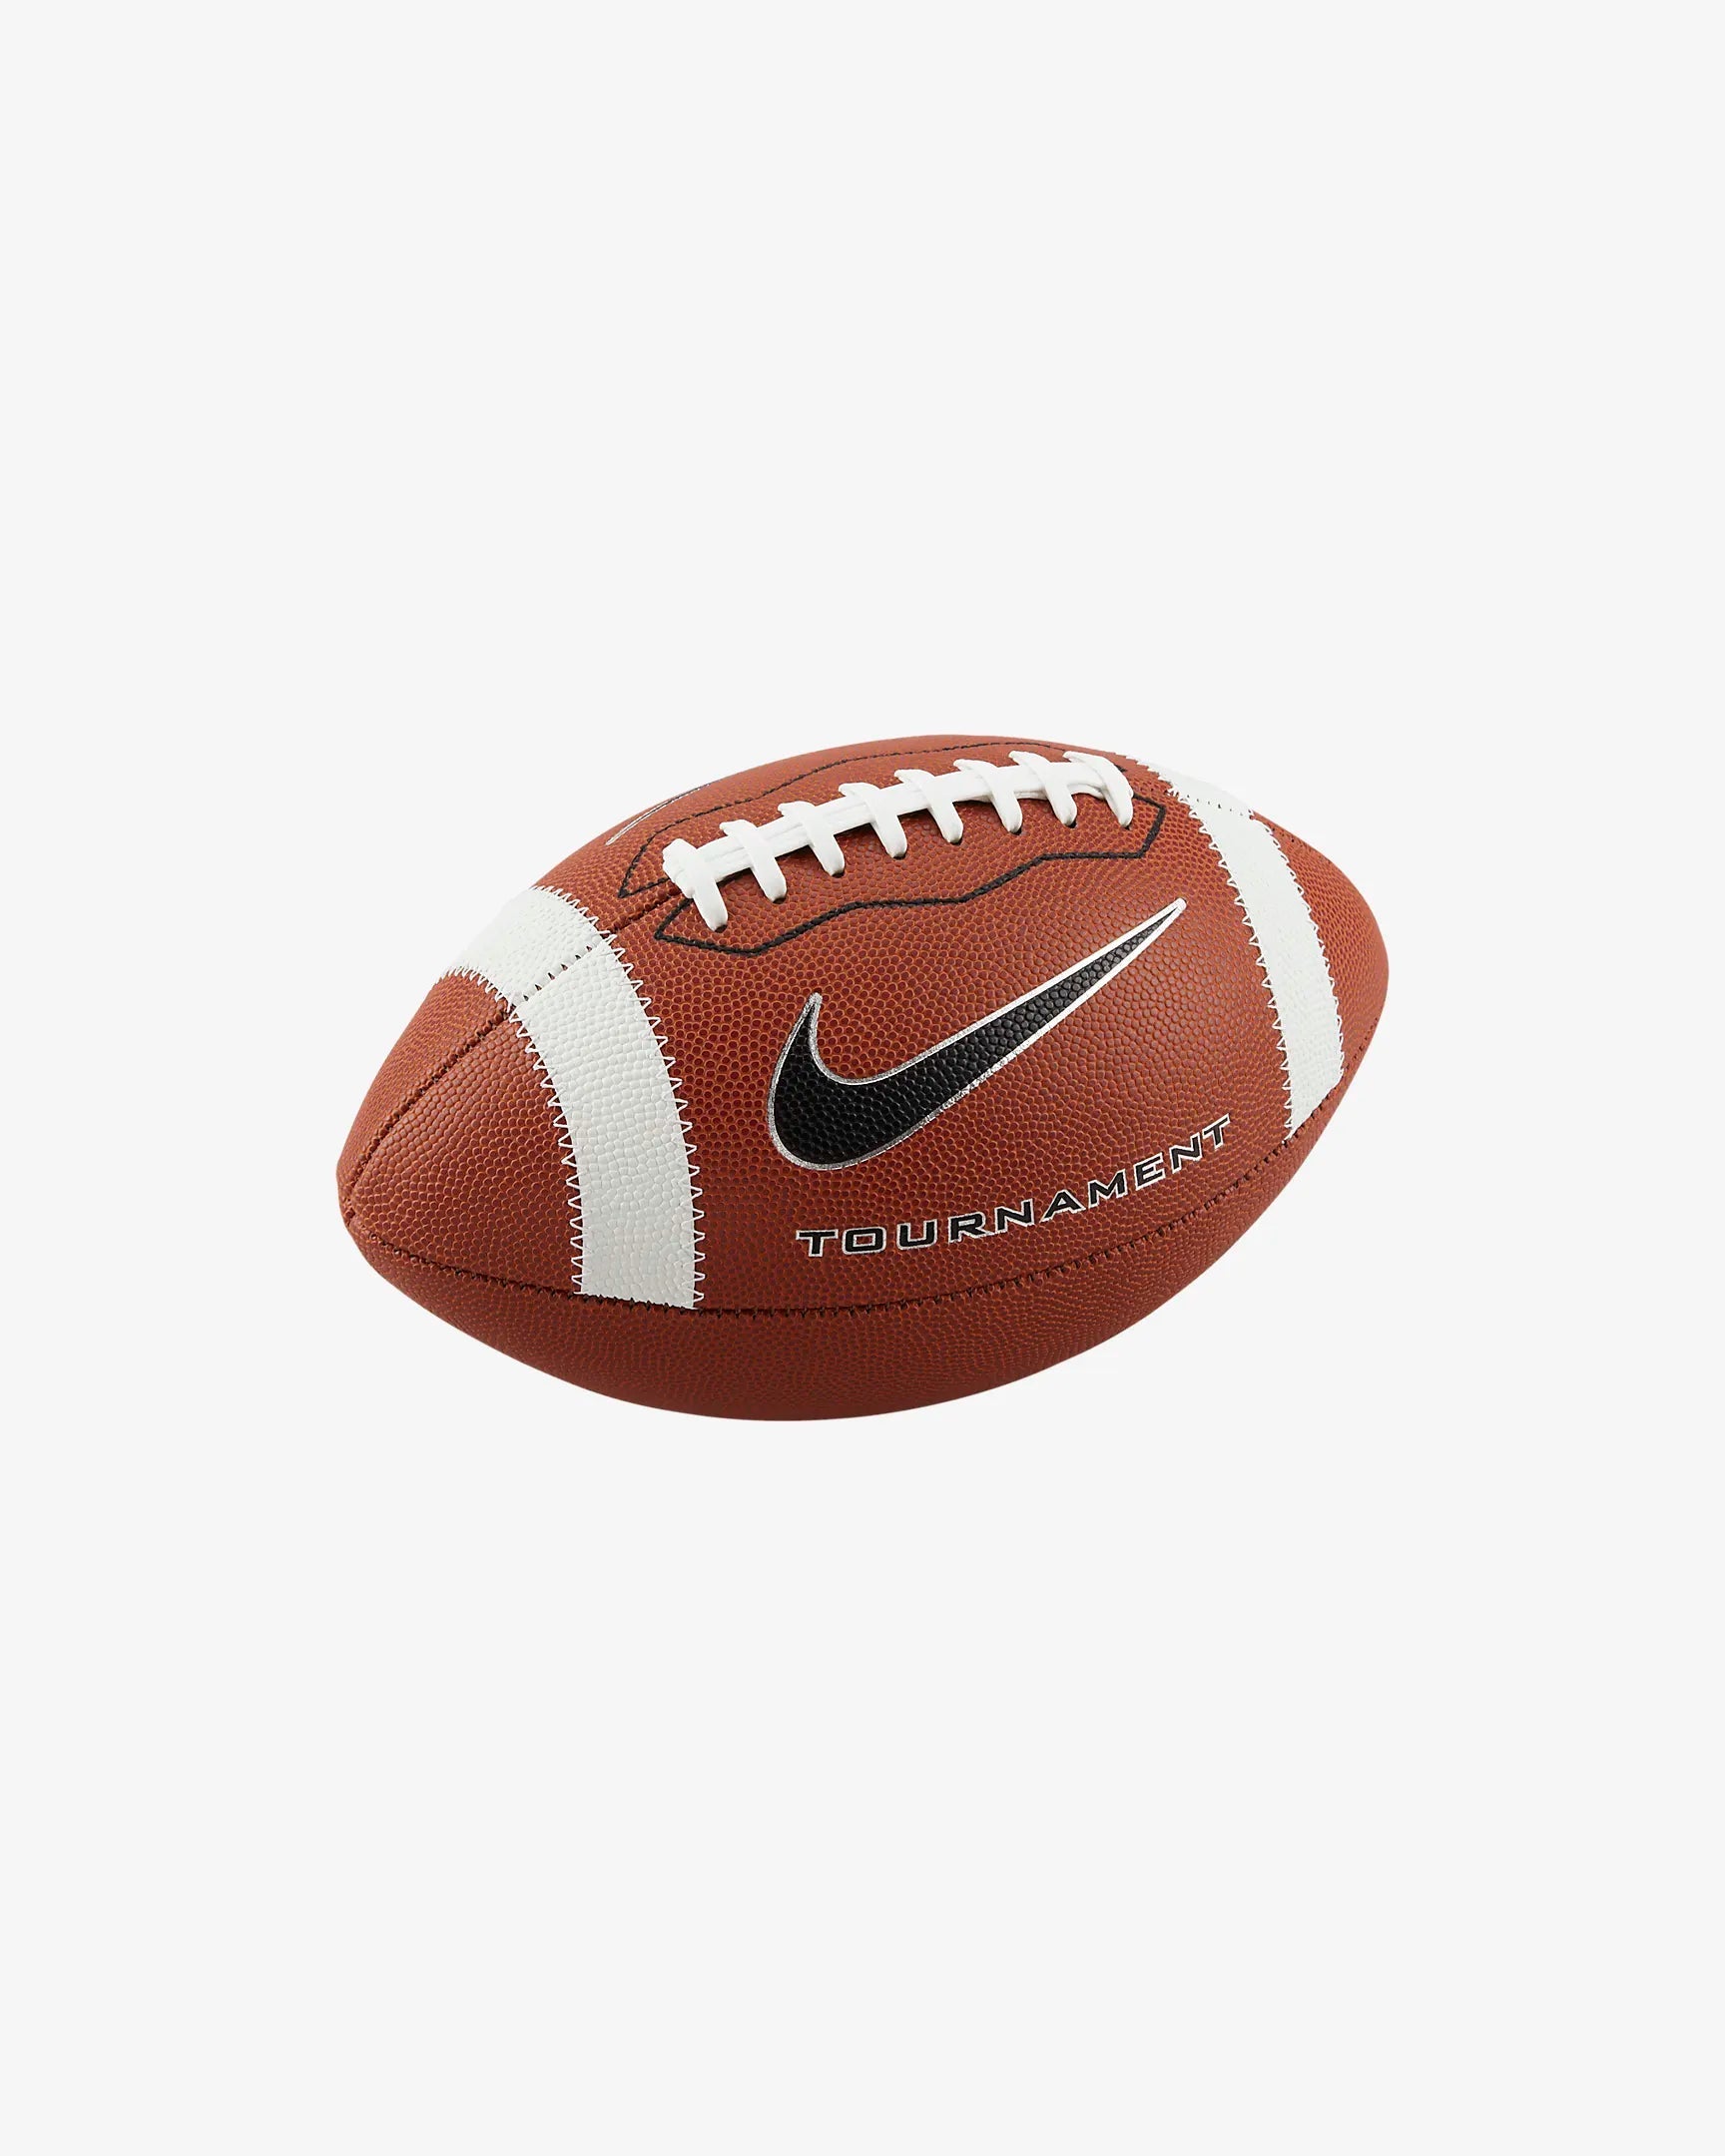 Nike Tournament Football - Deflated-Sports Replay - Sports Excellence-Sports Replay - Sports Excellence